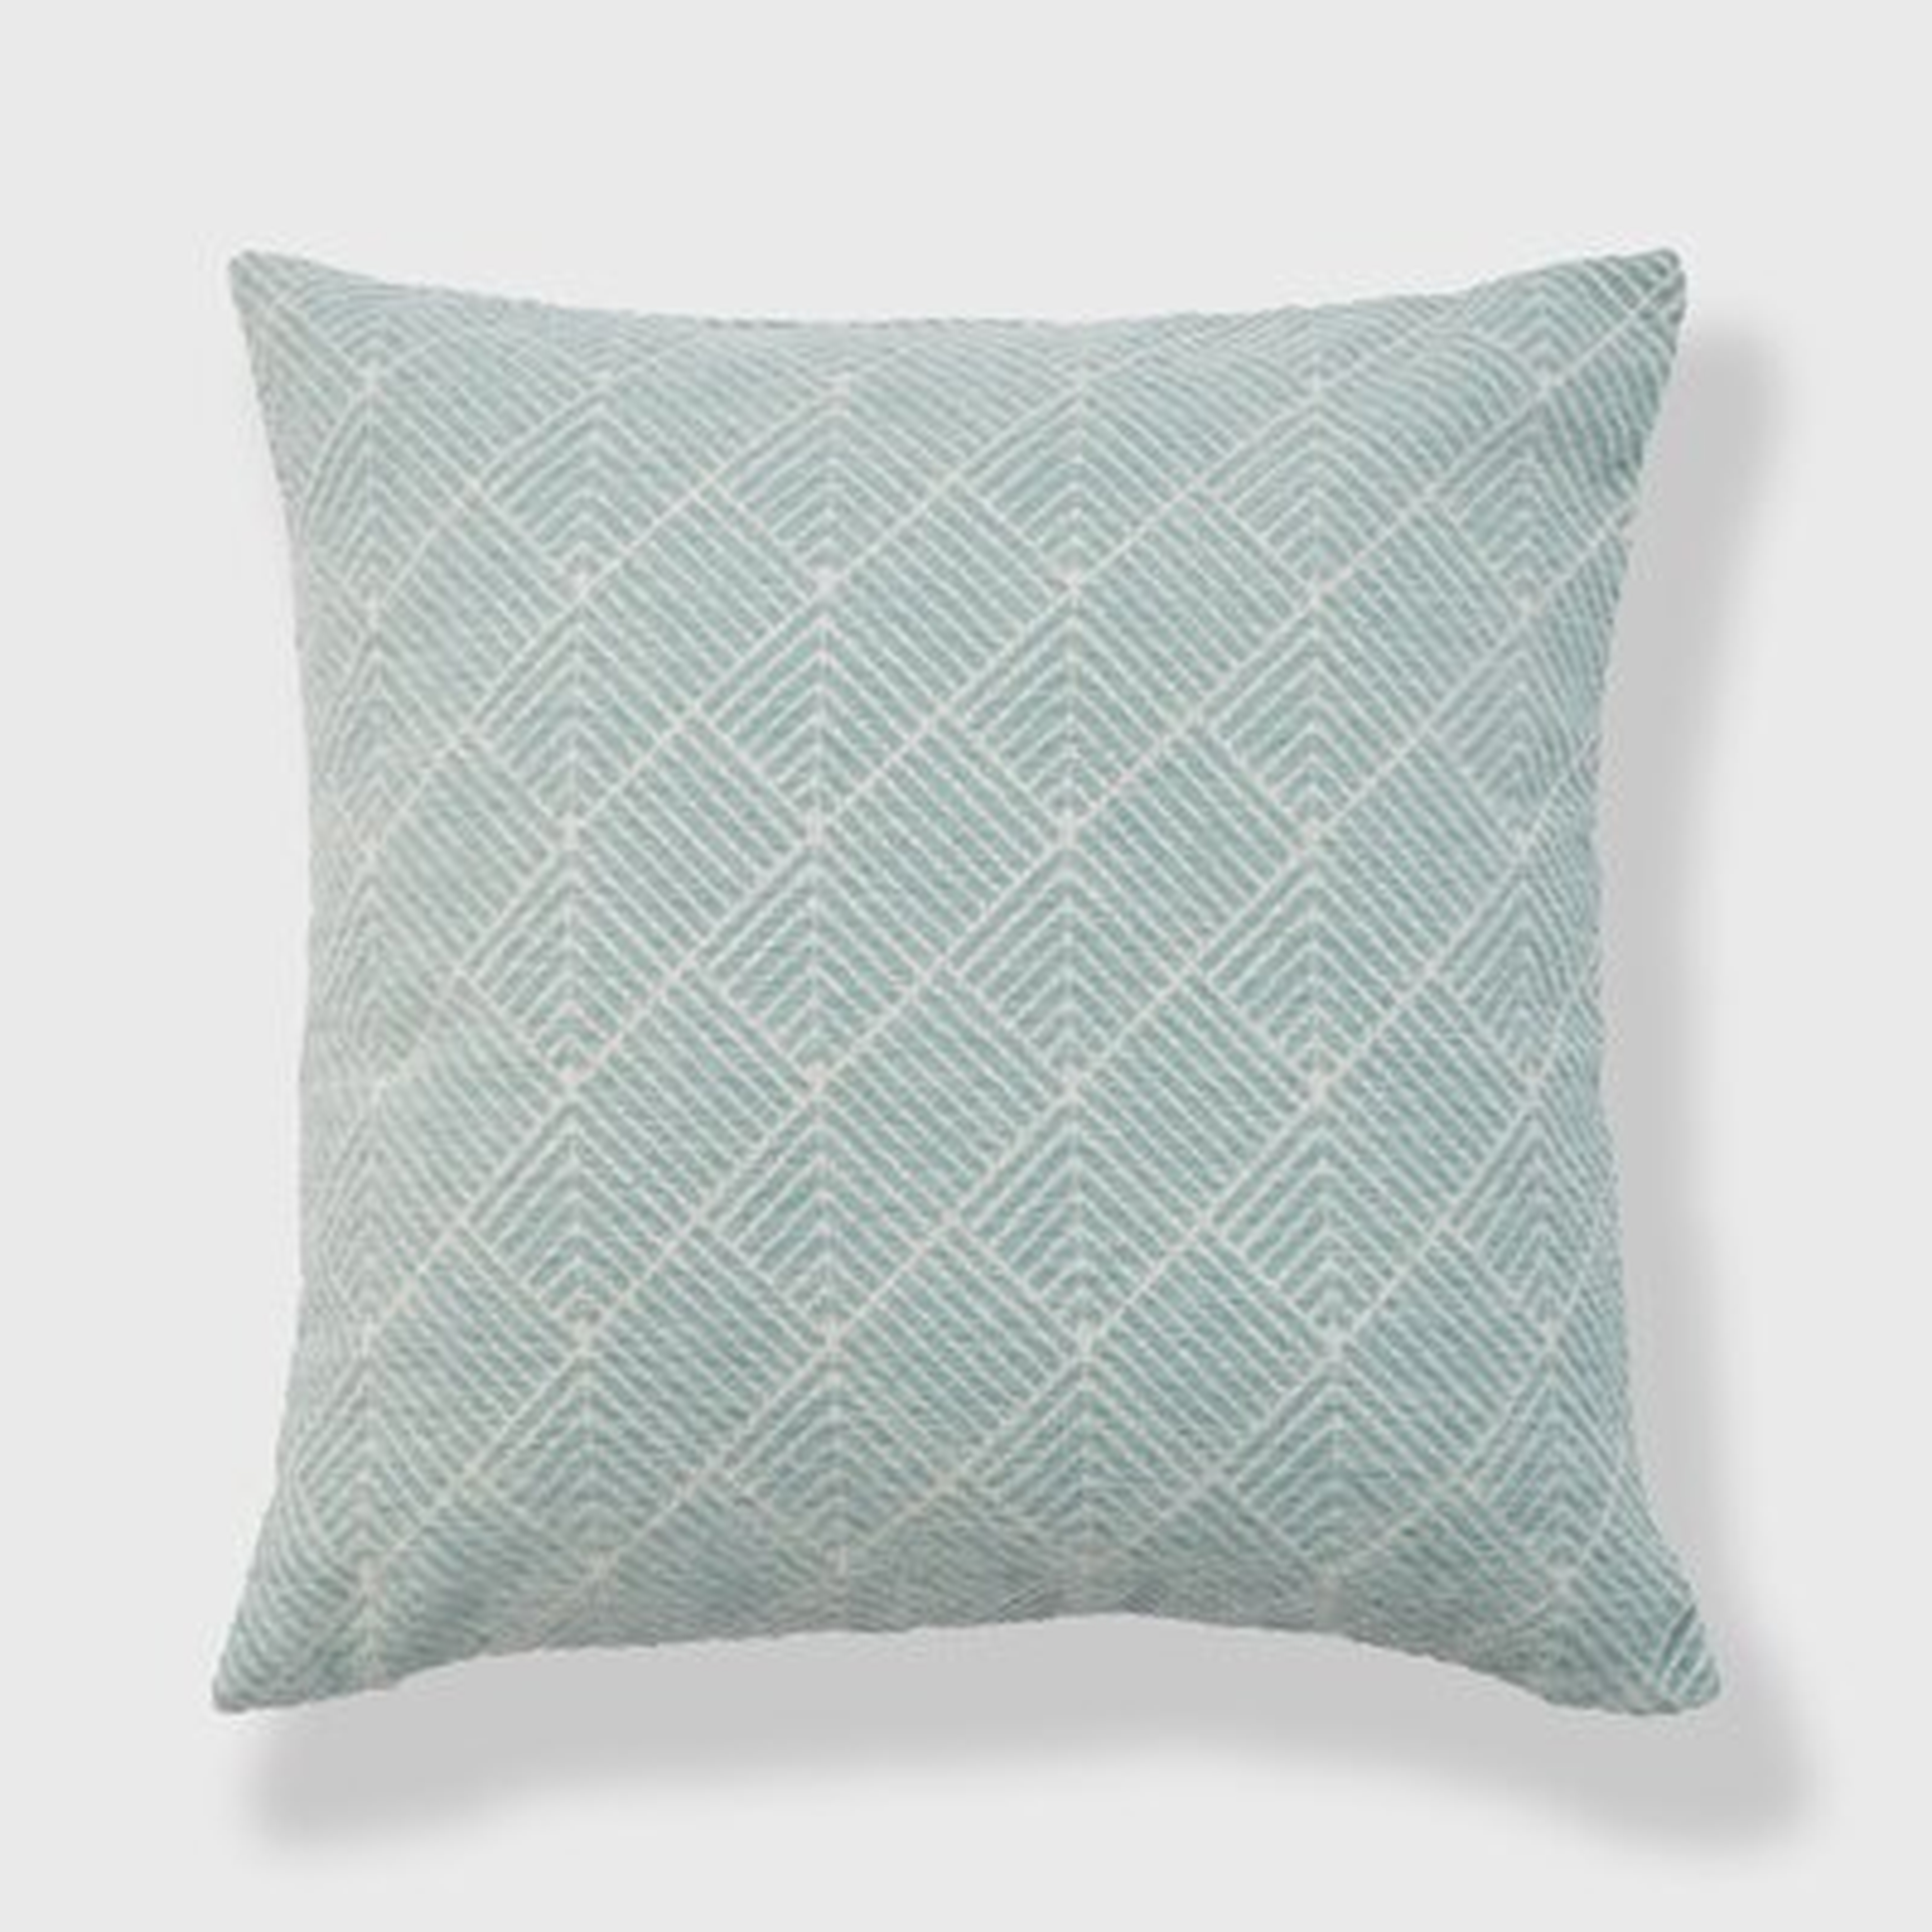 Tabitha Square Pillow Cover & Insert - Wayfair